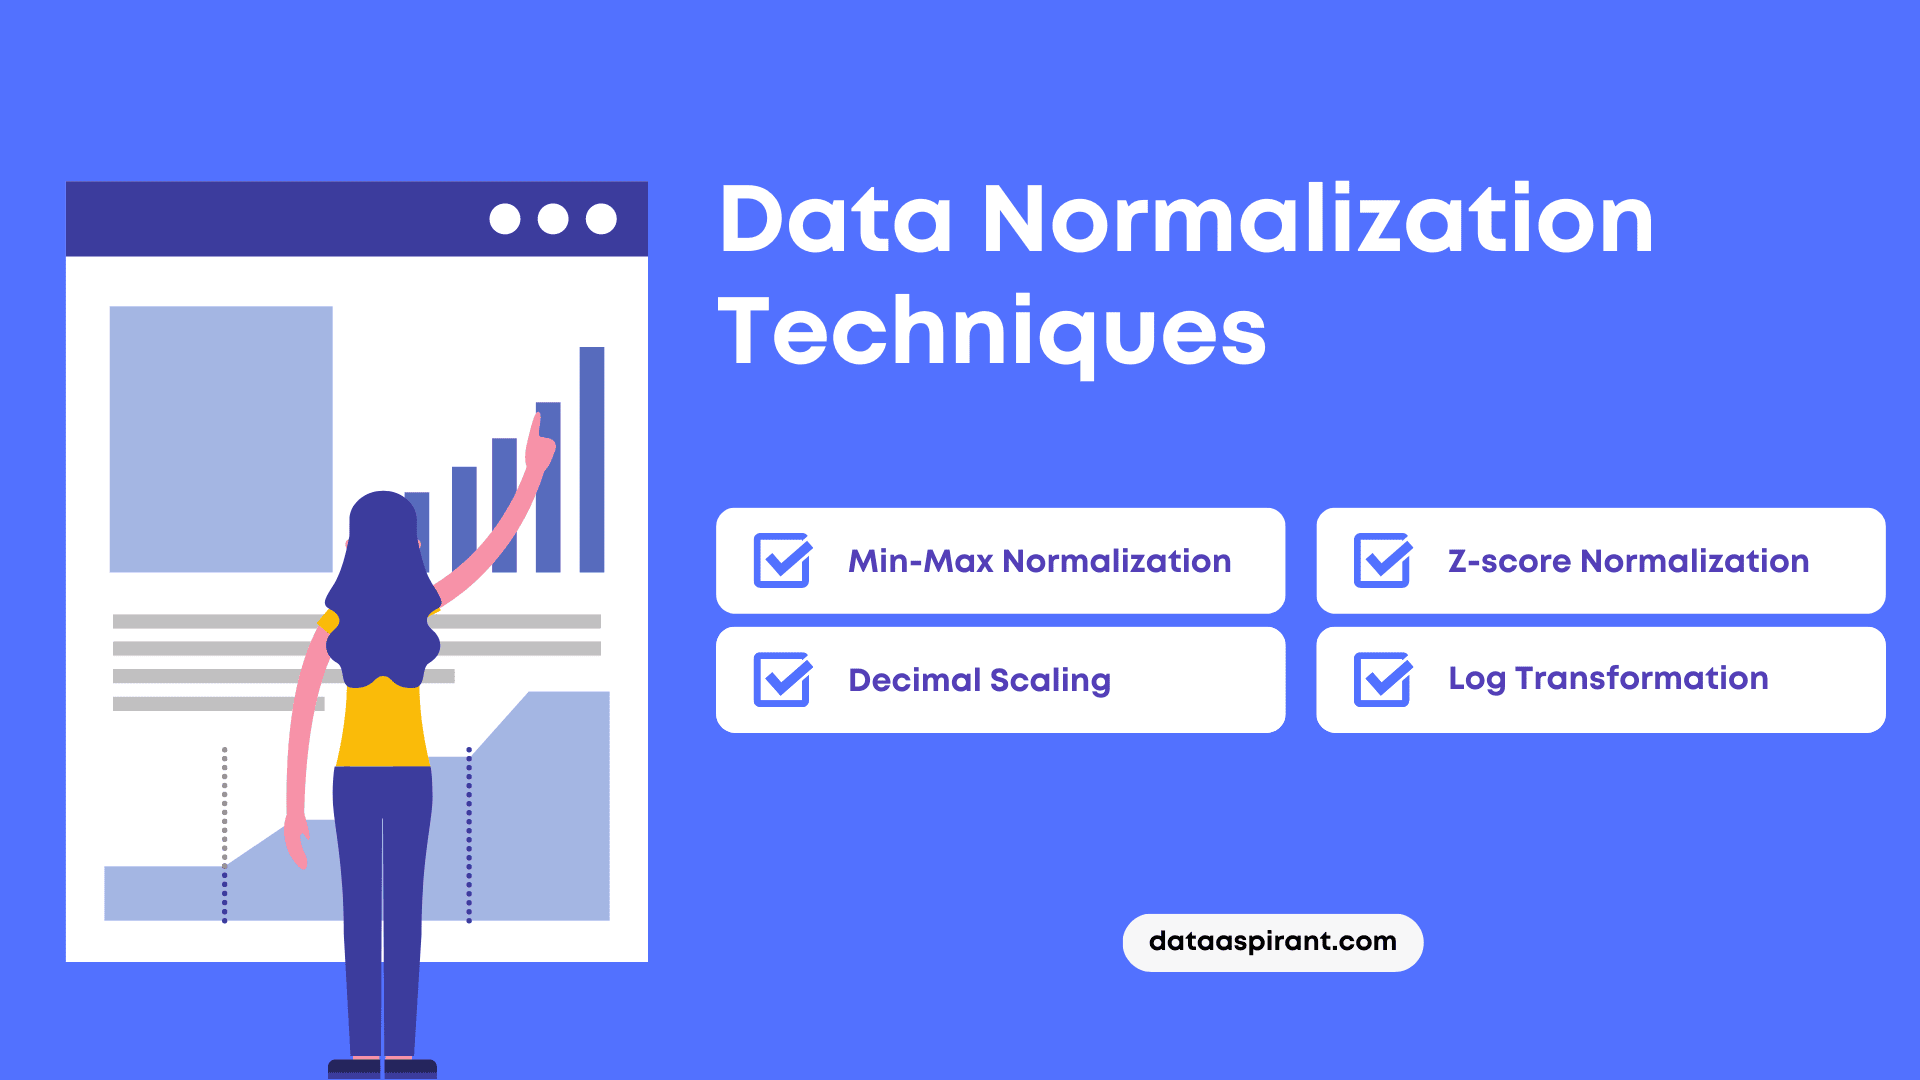 Different Data Normalization Techniques